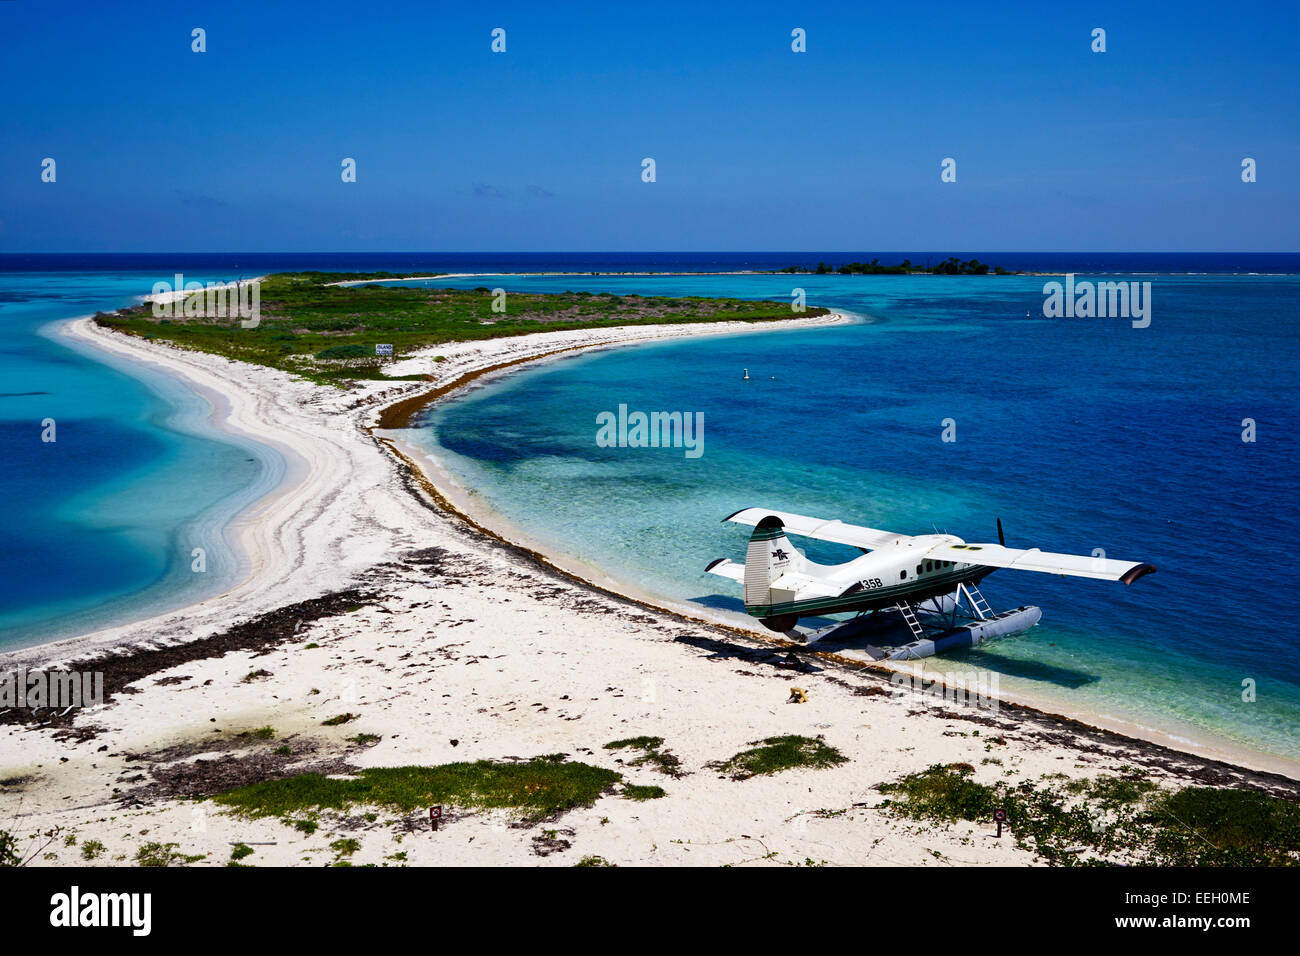 Dehaviland DHC-3 otter idrovolante sulla spiaggia e la chiave a bussola a Dry Tortugas Florida keys usa Foto Stock